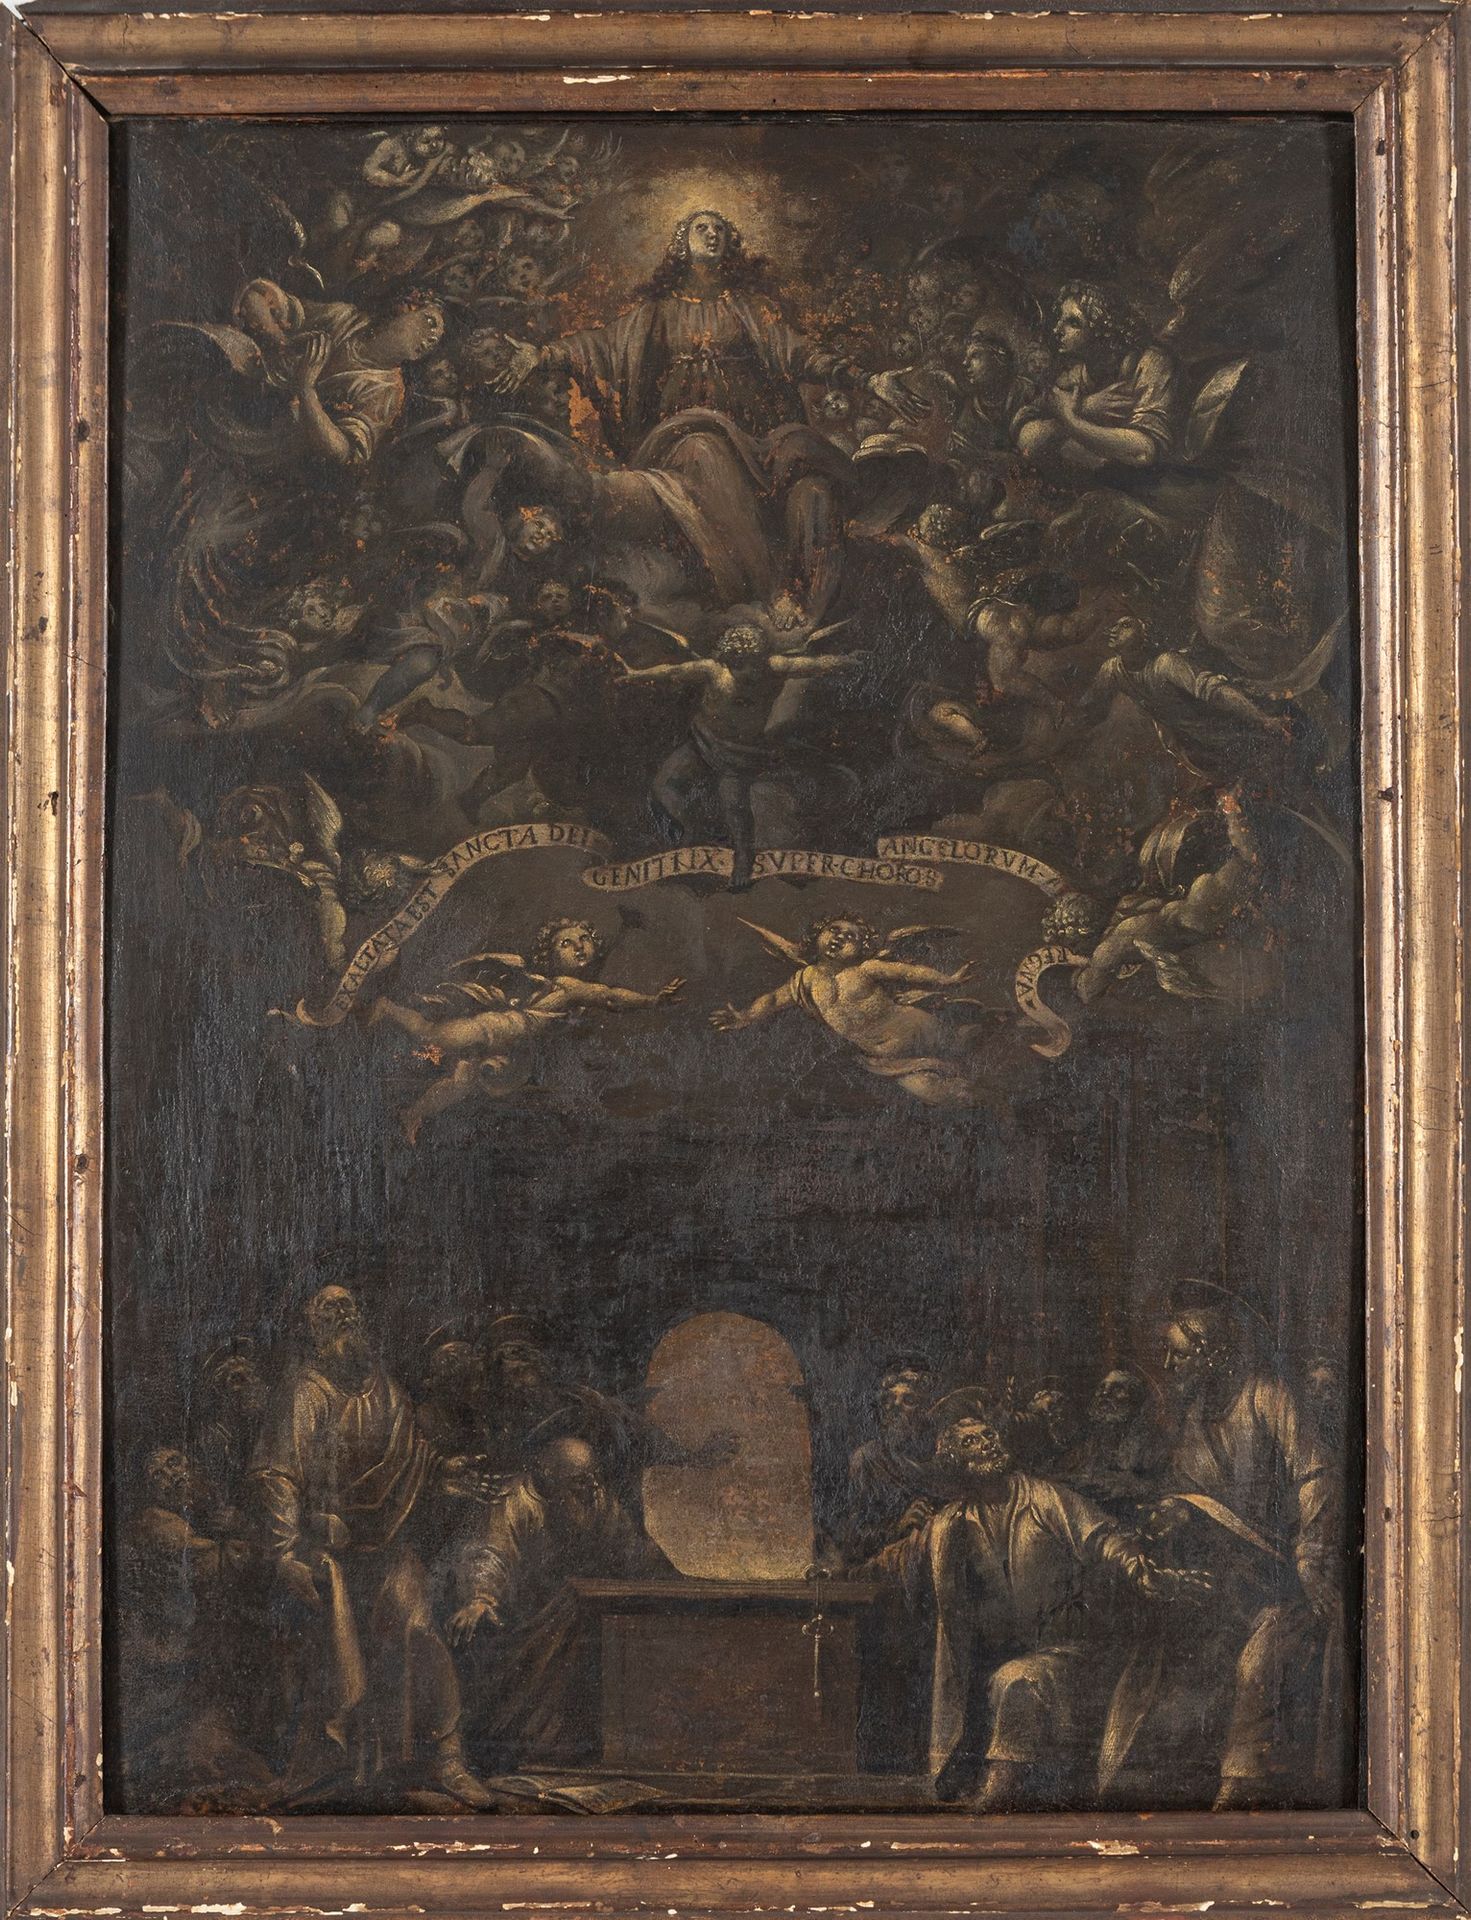 Scuola lombarda, secolo XVII Assomption de la Vierge

huile sur toile, en monoch&hellip;